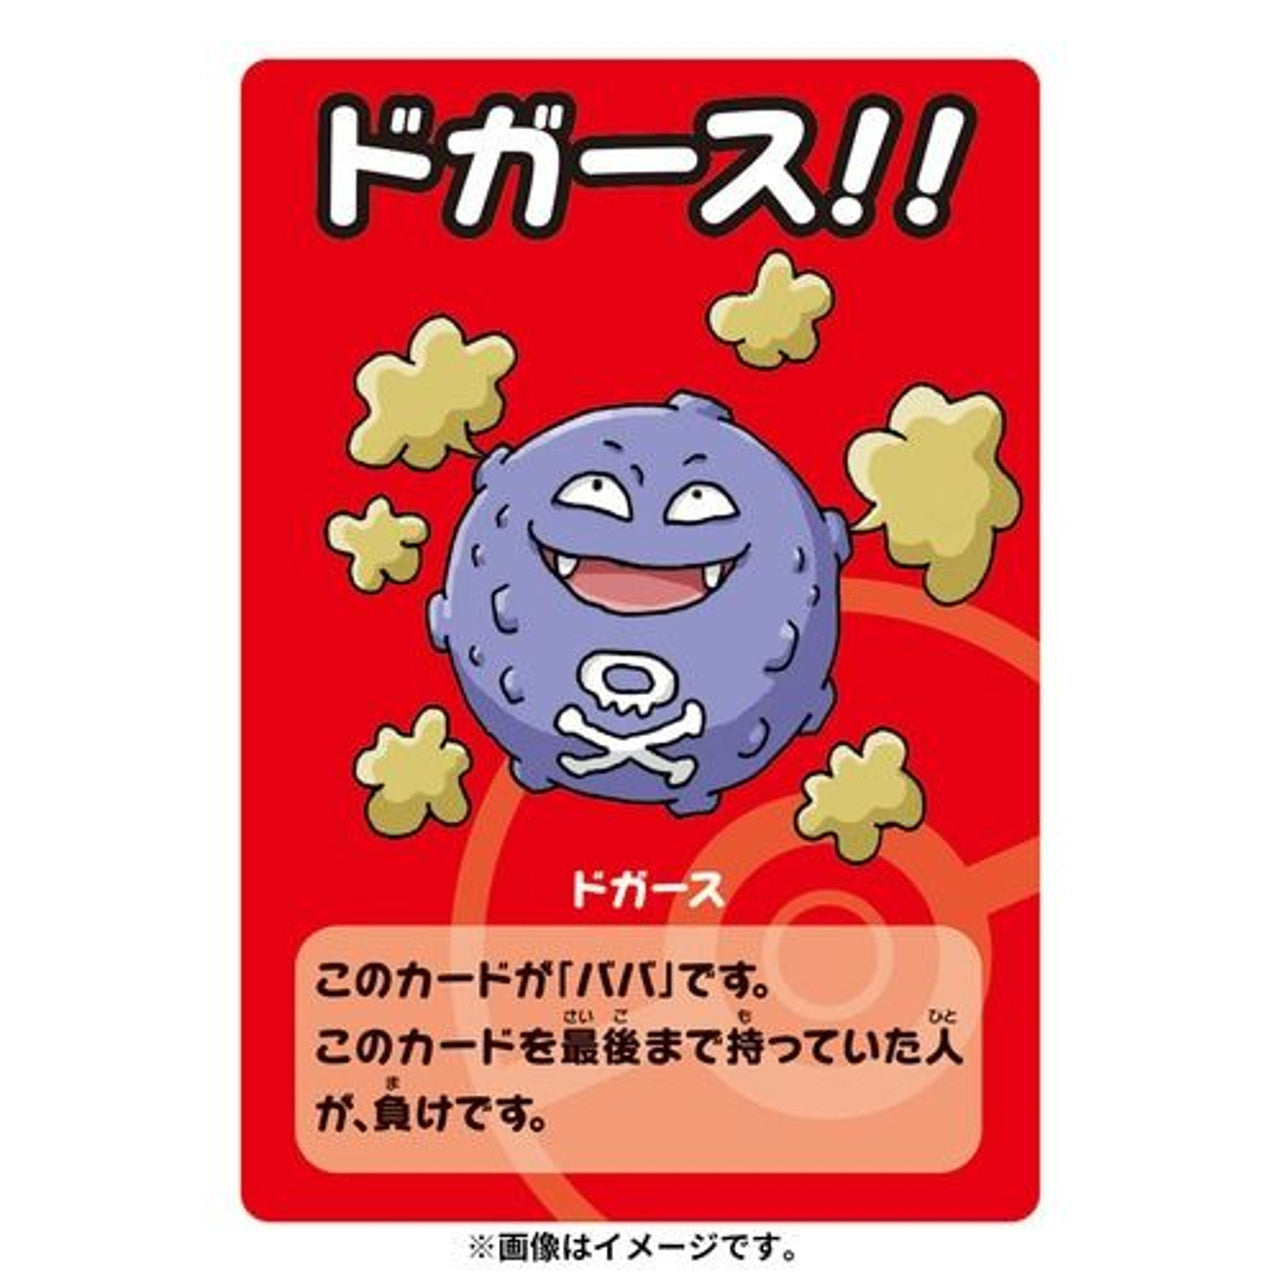 Pokémon Center Japan | Pokémon Babanuki (Old Maid) - Blue Edition